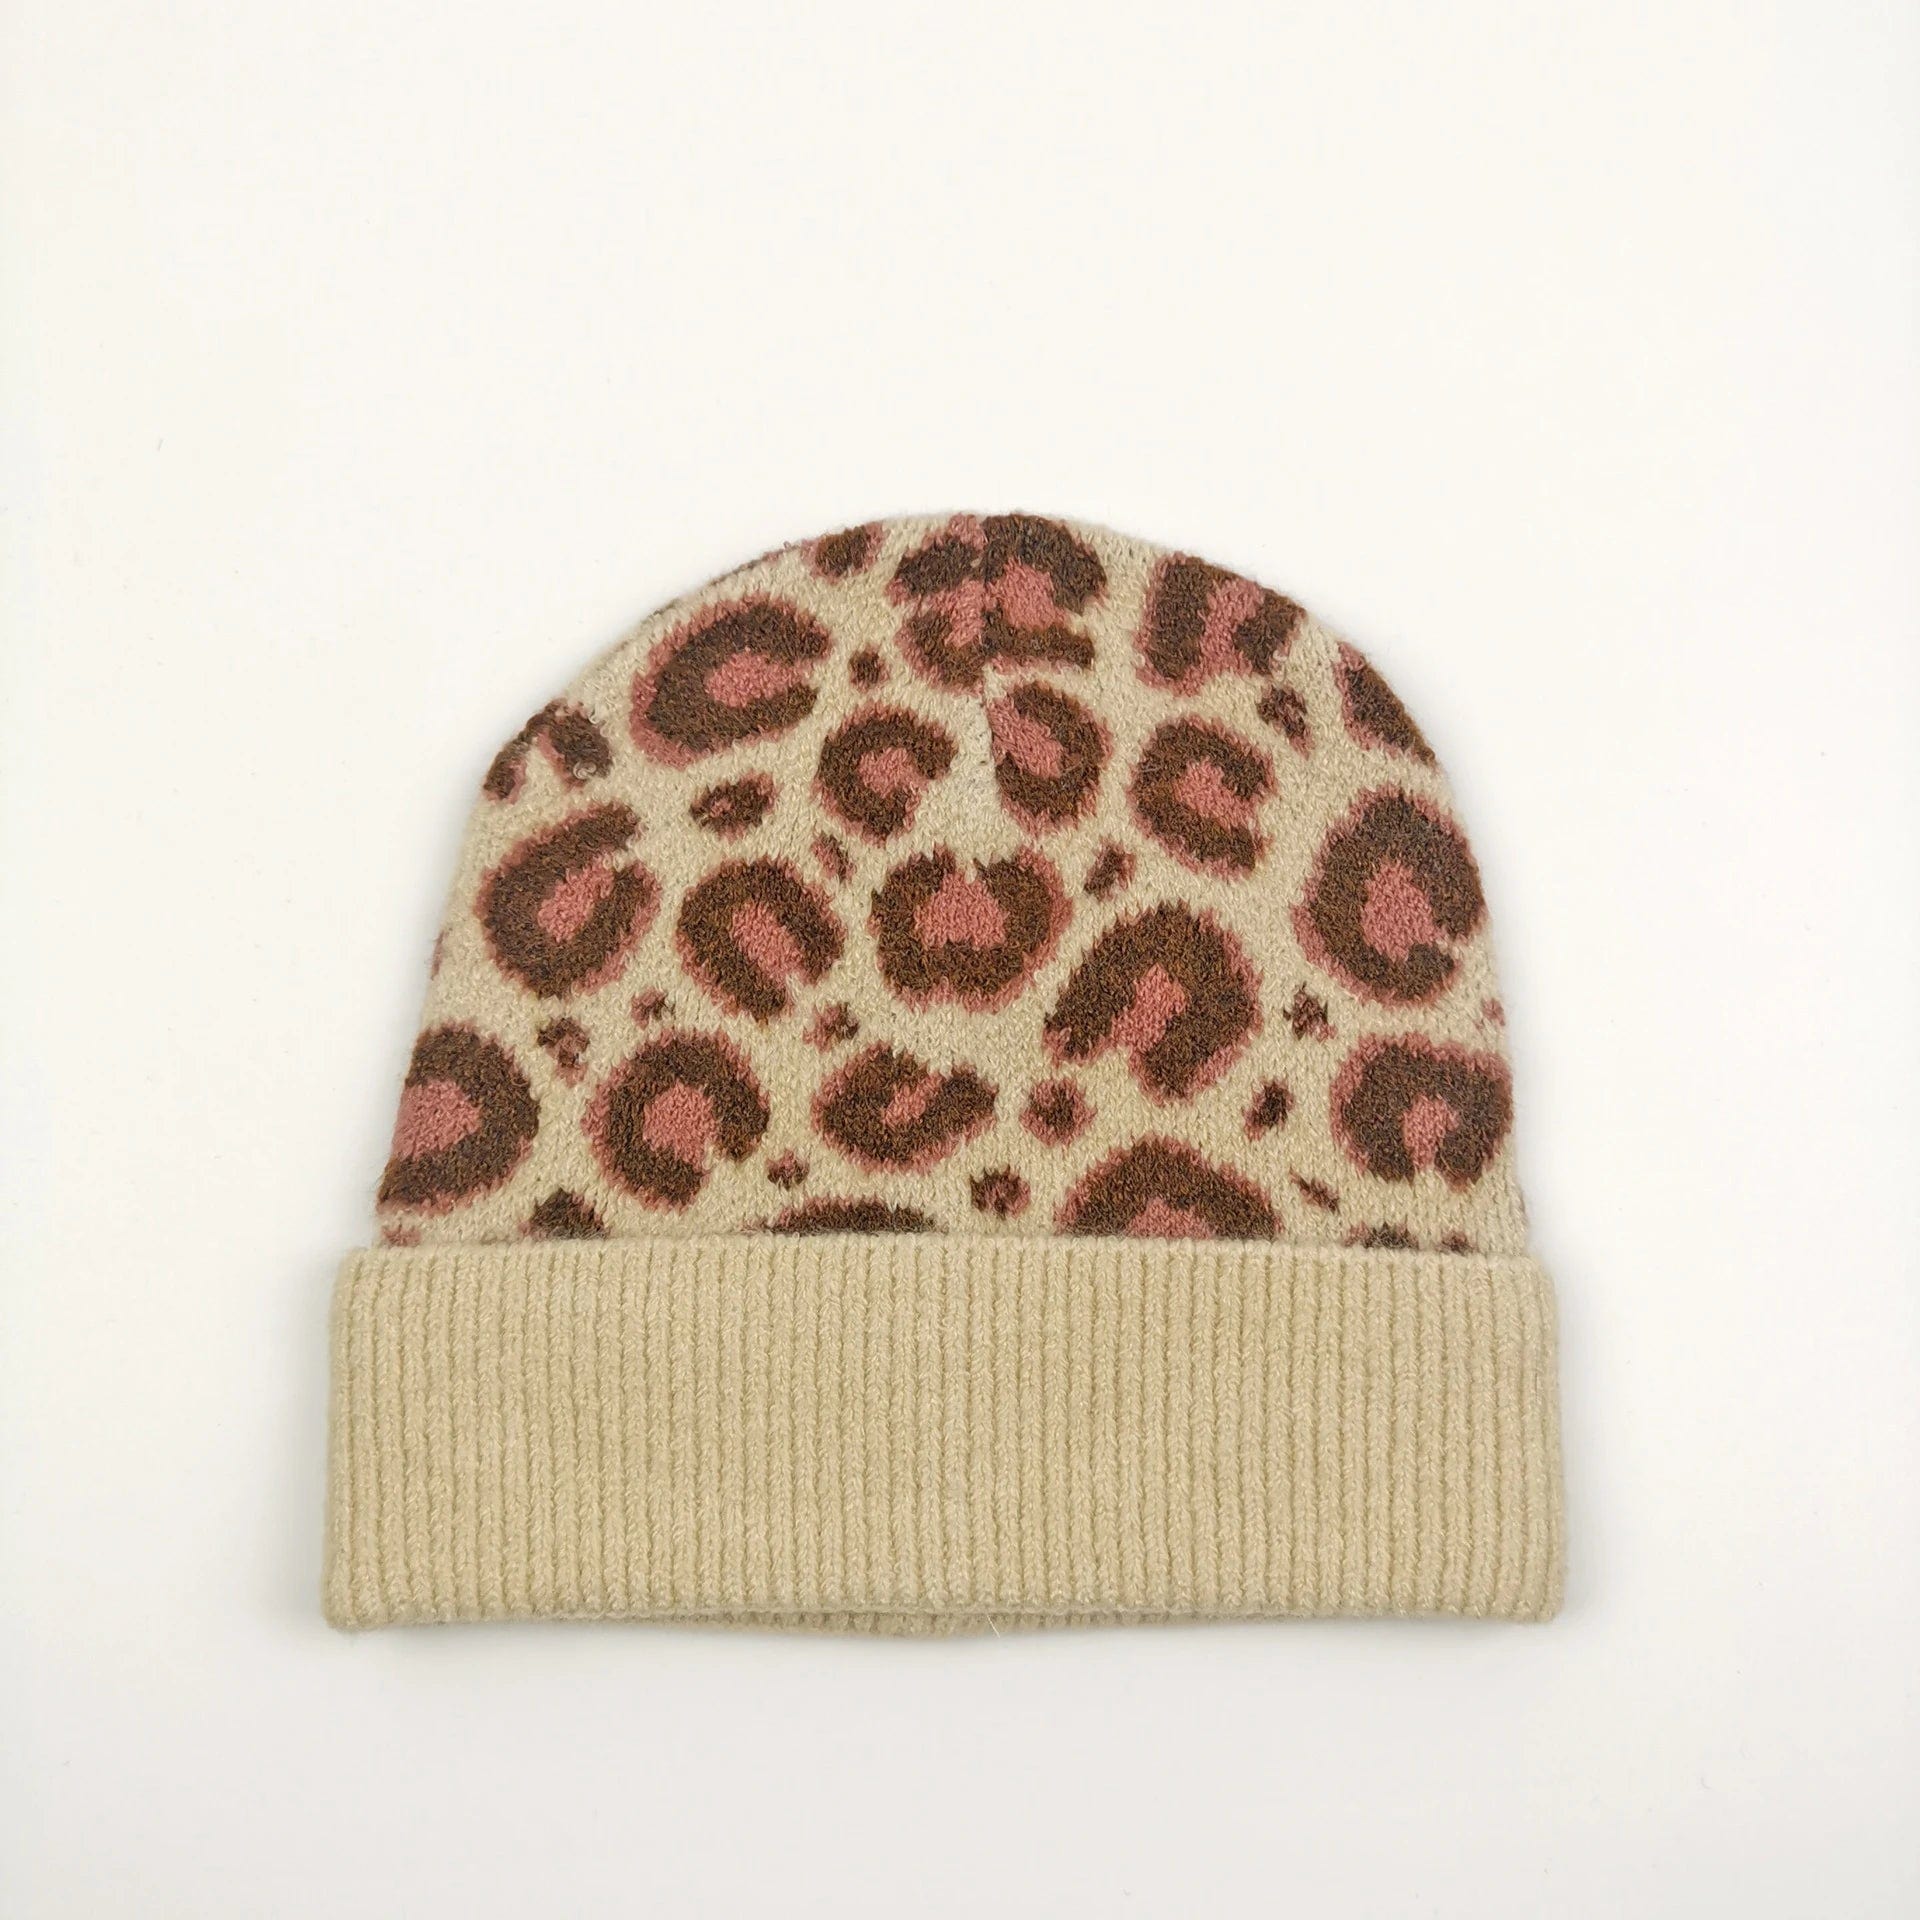 Leopard clothing 6 / 55-60cm Leopard beanie hat